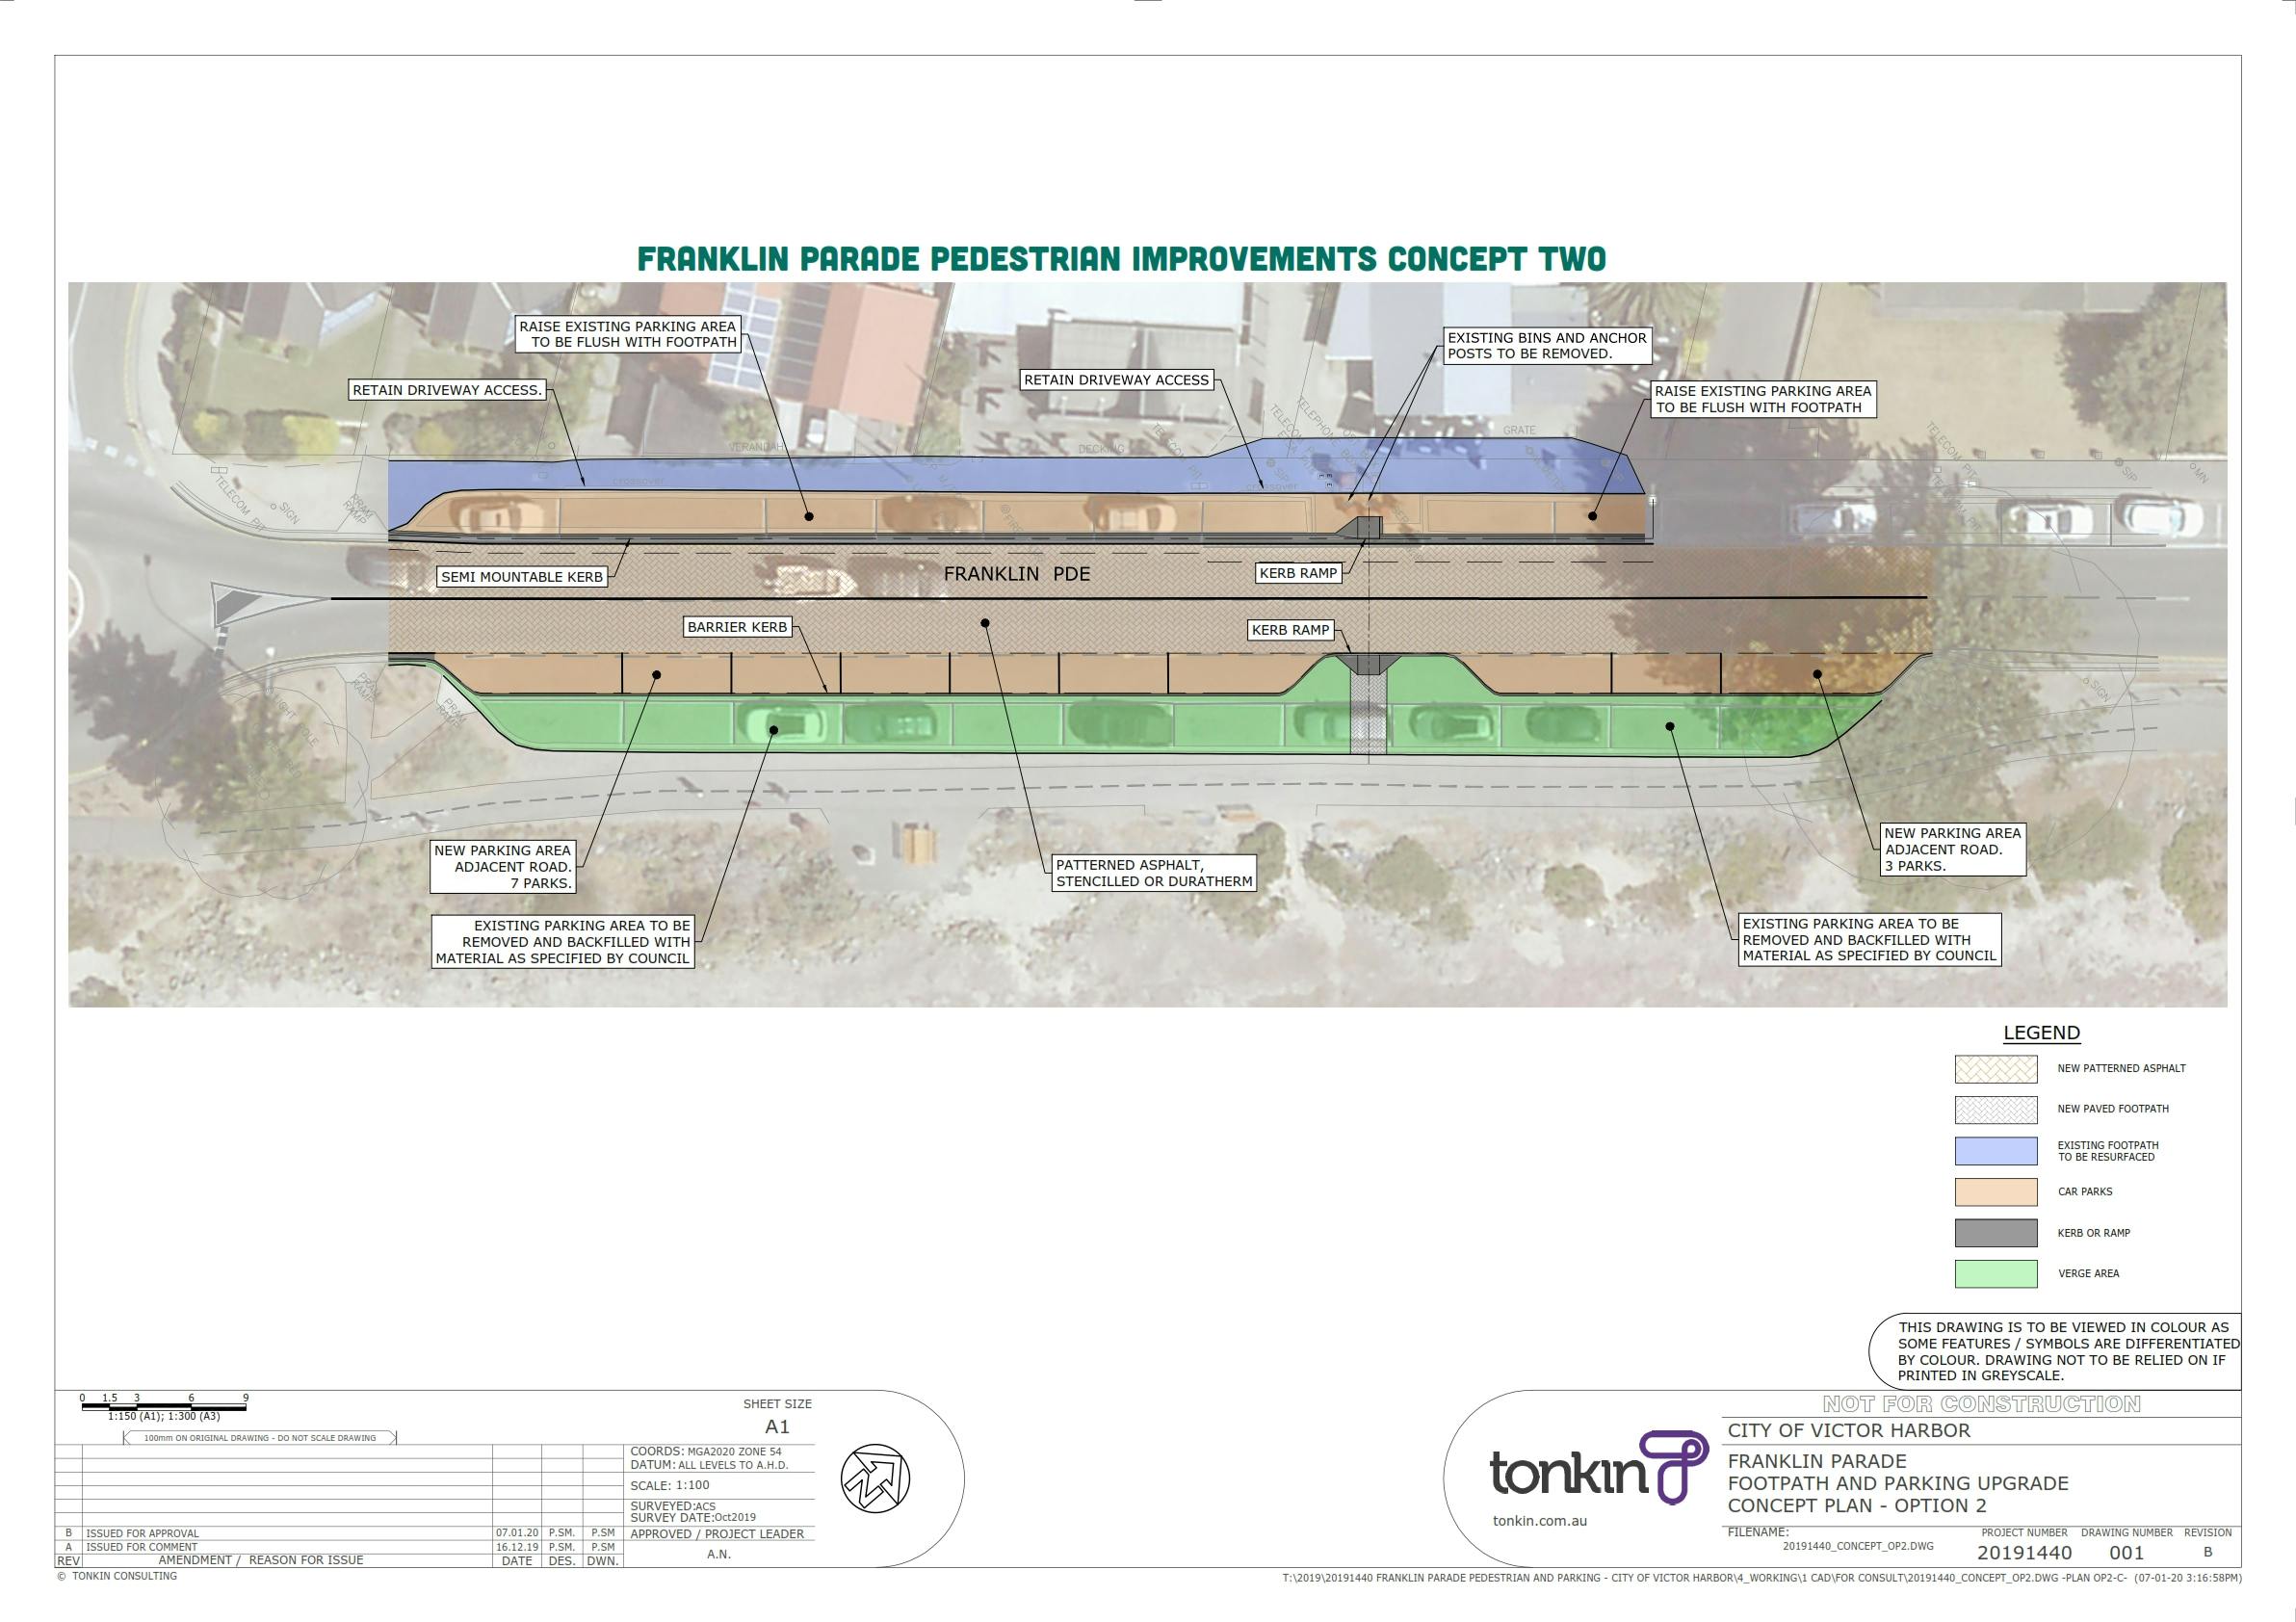 Option 2: Franklin Parade Pedestrian Improvements Concept